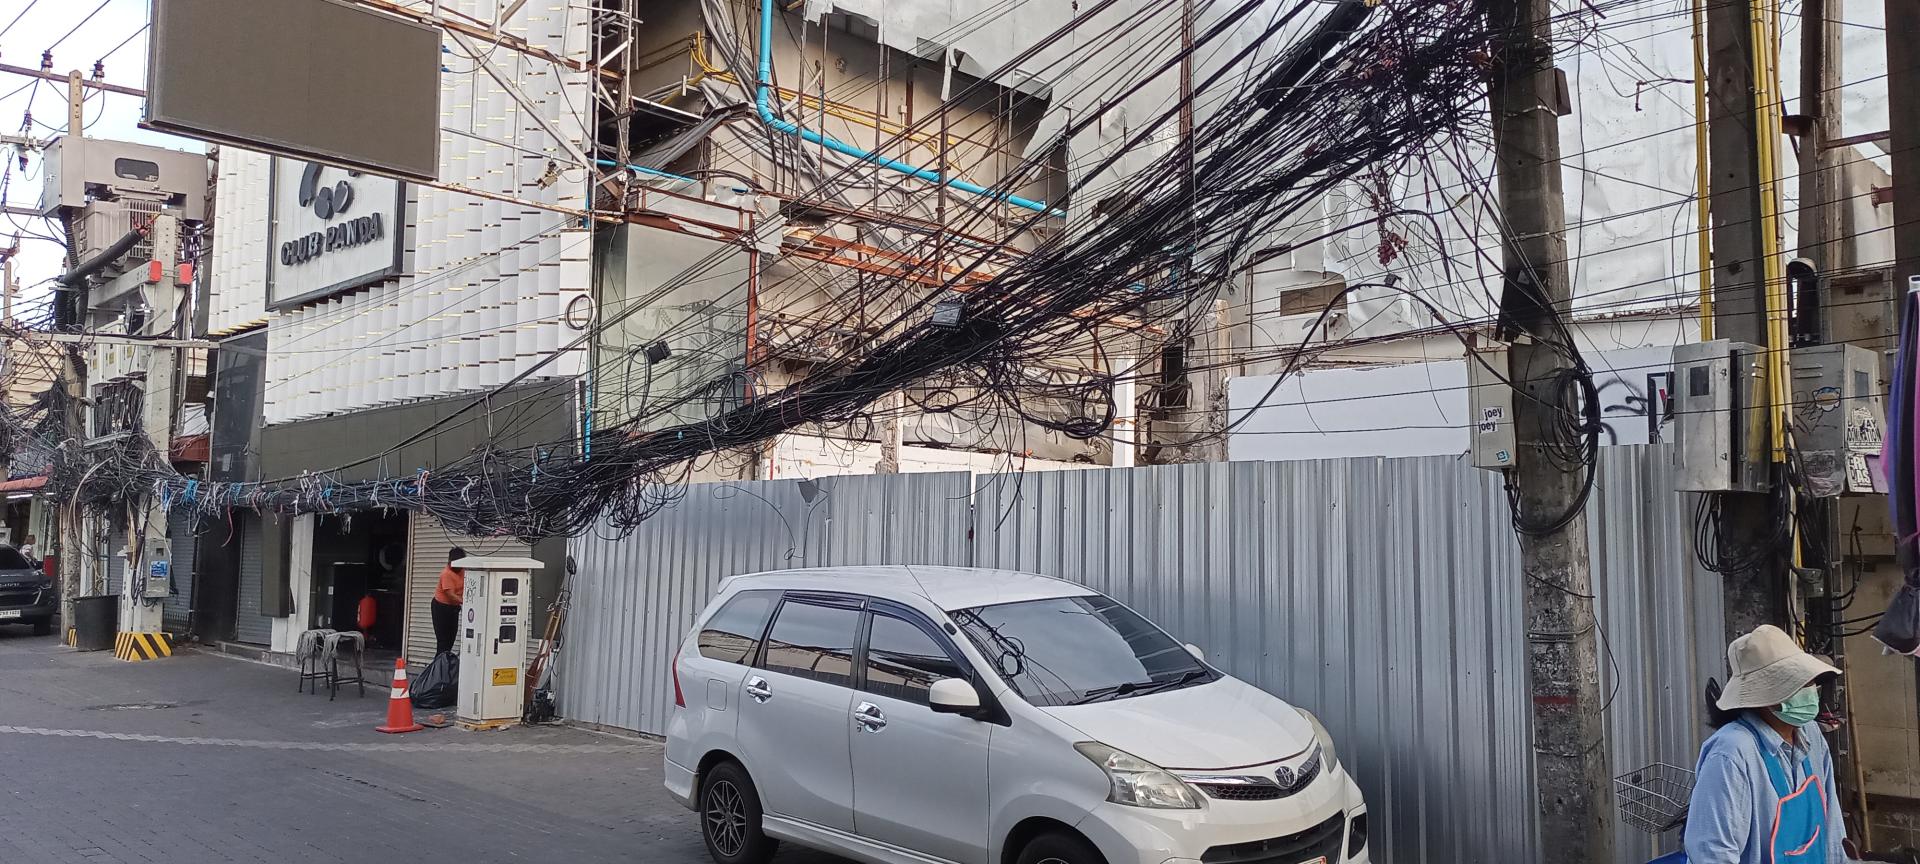 Dangerous Cables on Walking Street